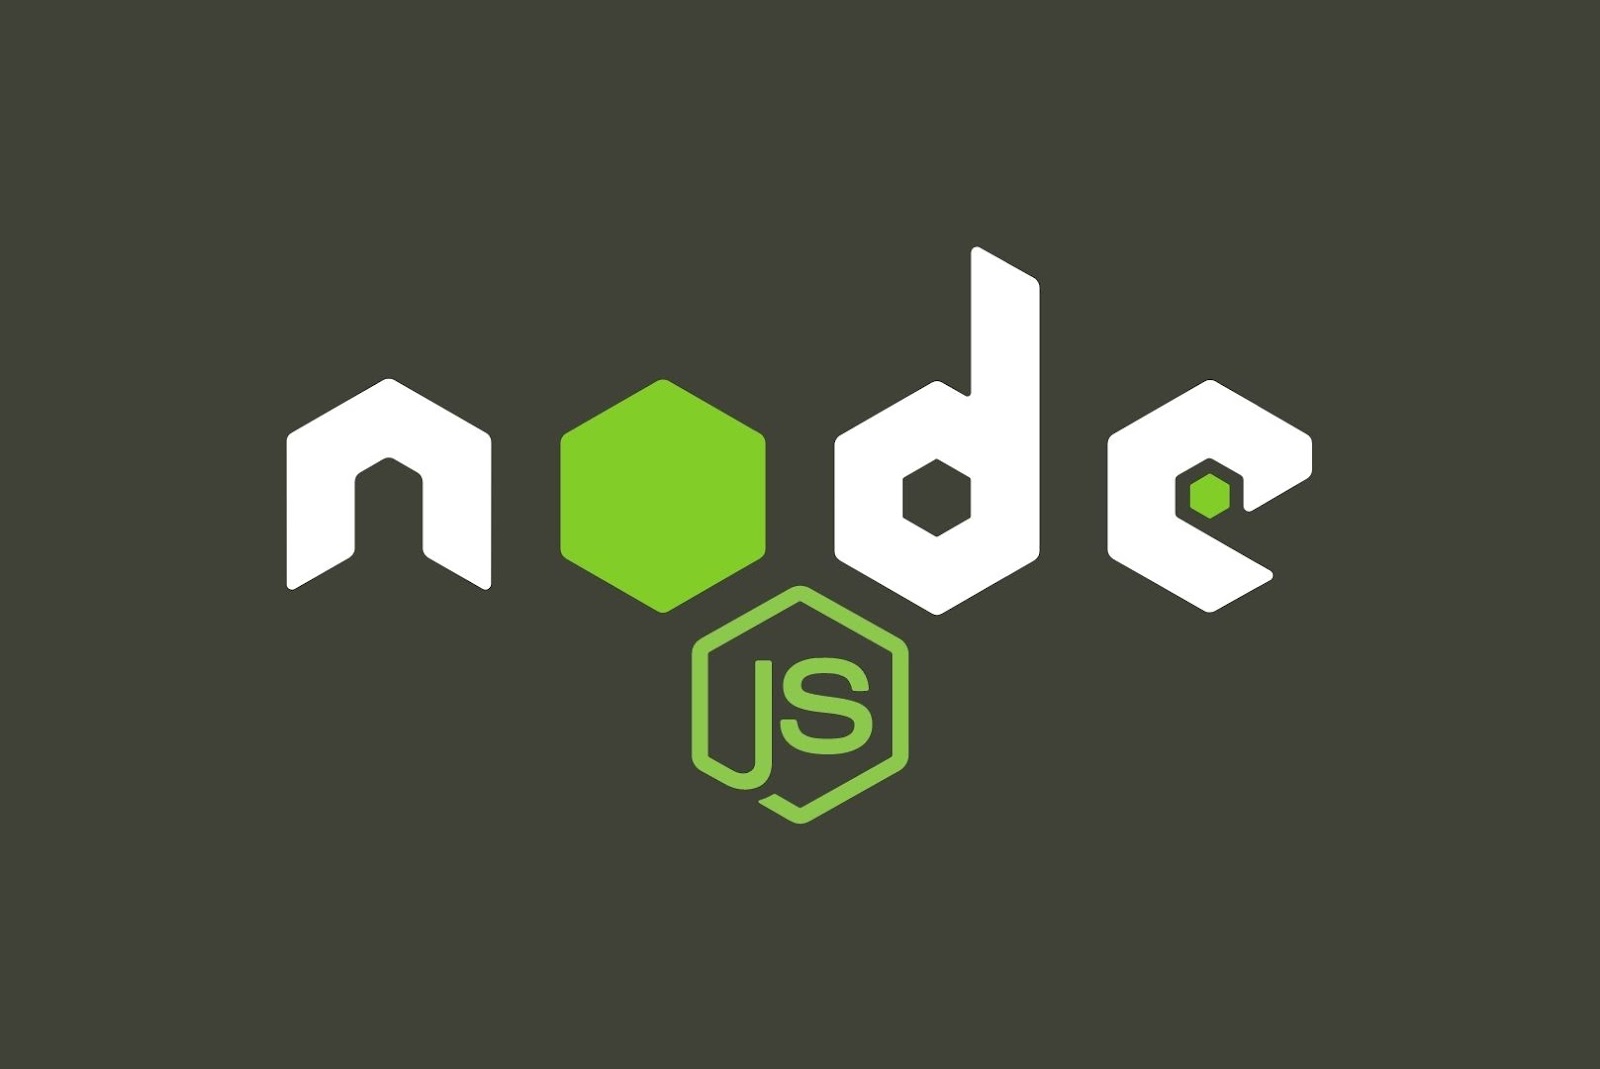 Nodejs framework